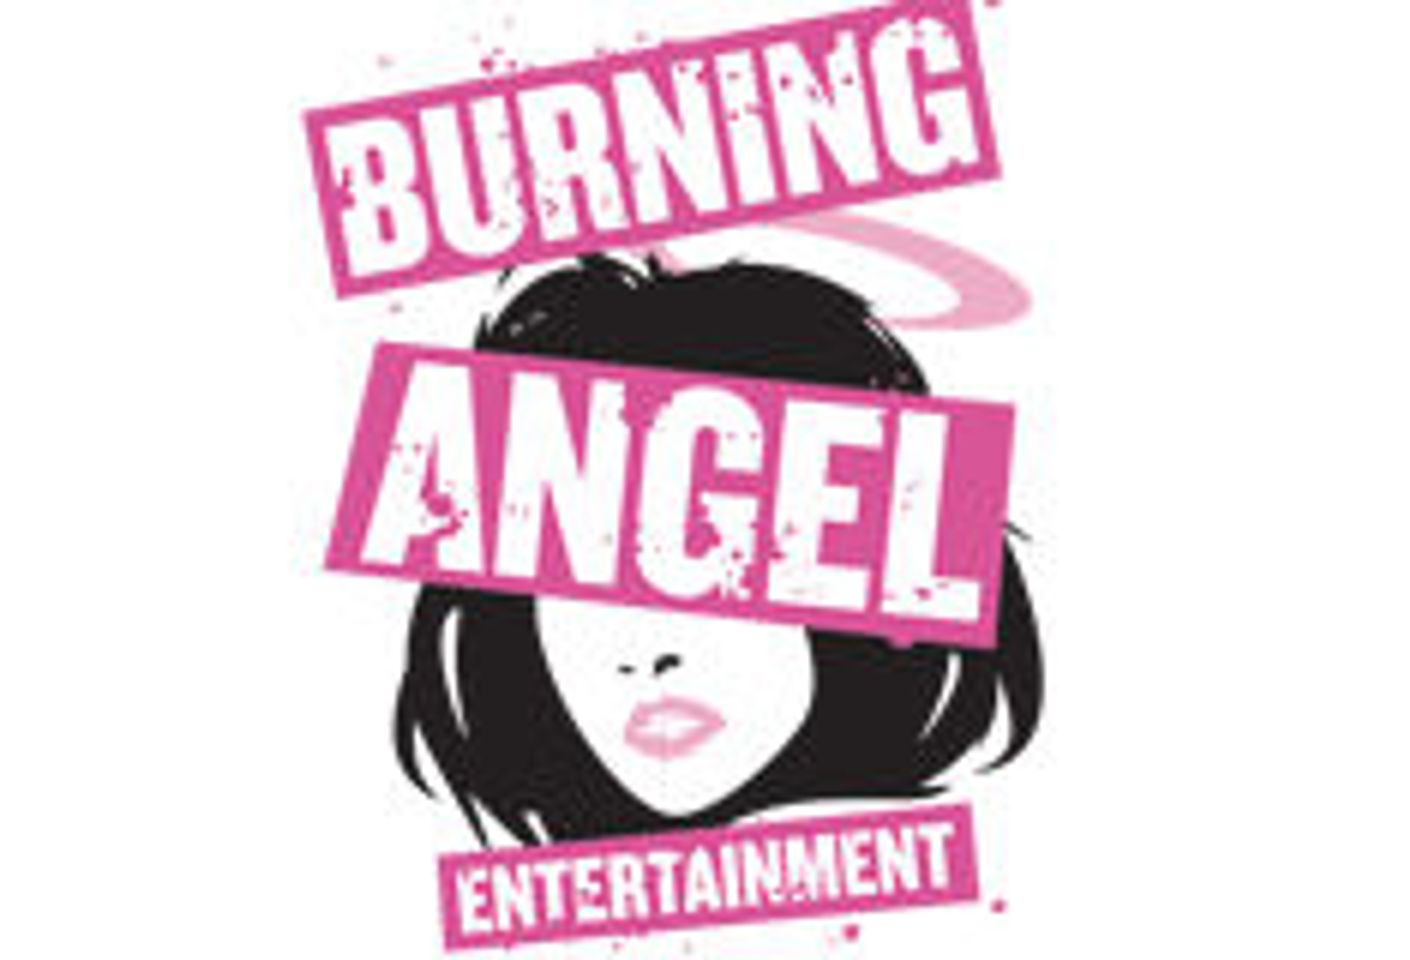 Joanna Angel, BurningAngel Girls Appearing at Exxxotica Chicago